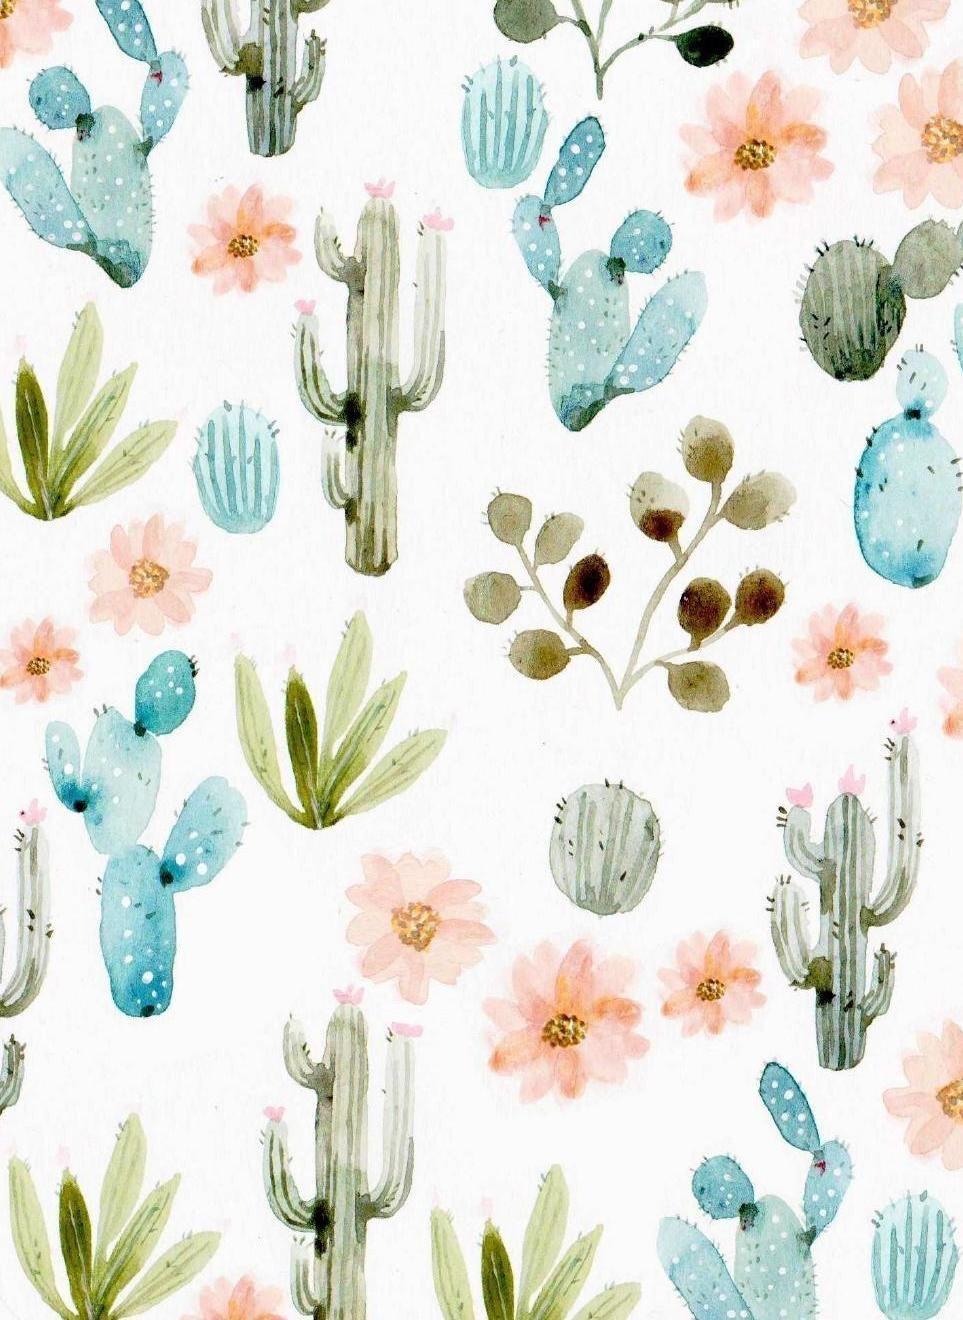 background #cactus #background #floral #pastel #tumblr #wallpaper